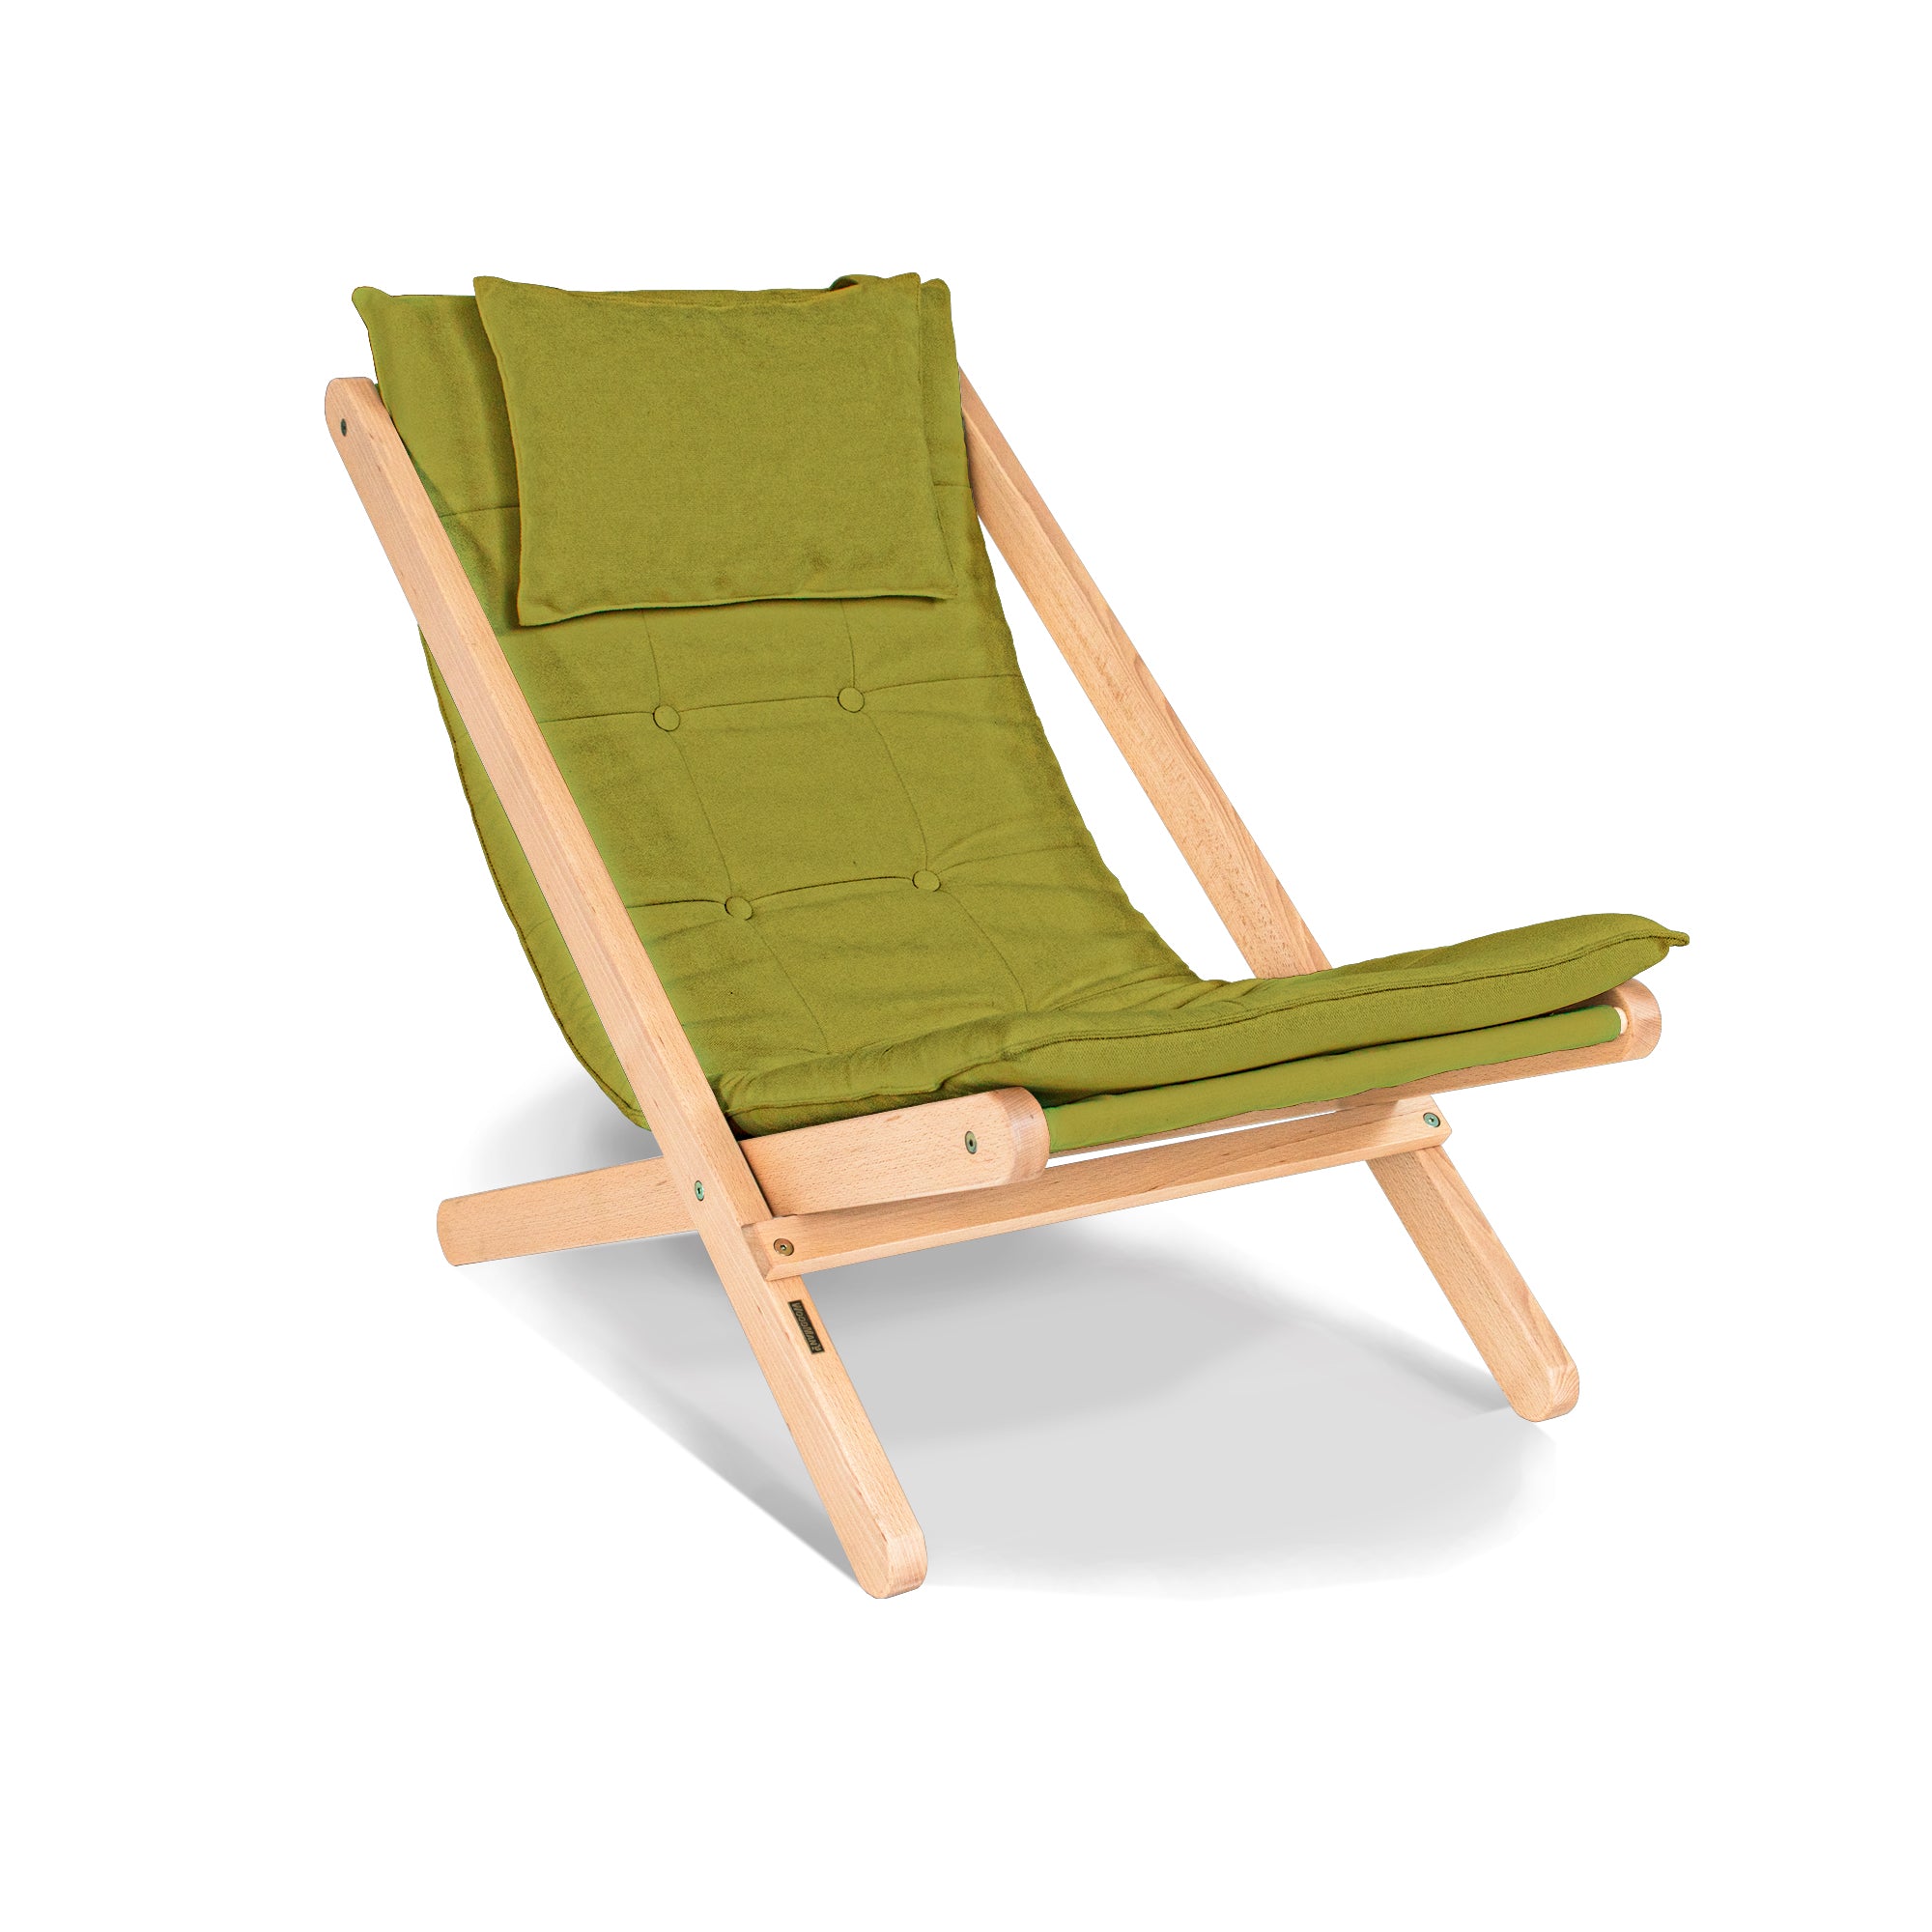 ALLEGRO Deckchair -green fabric